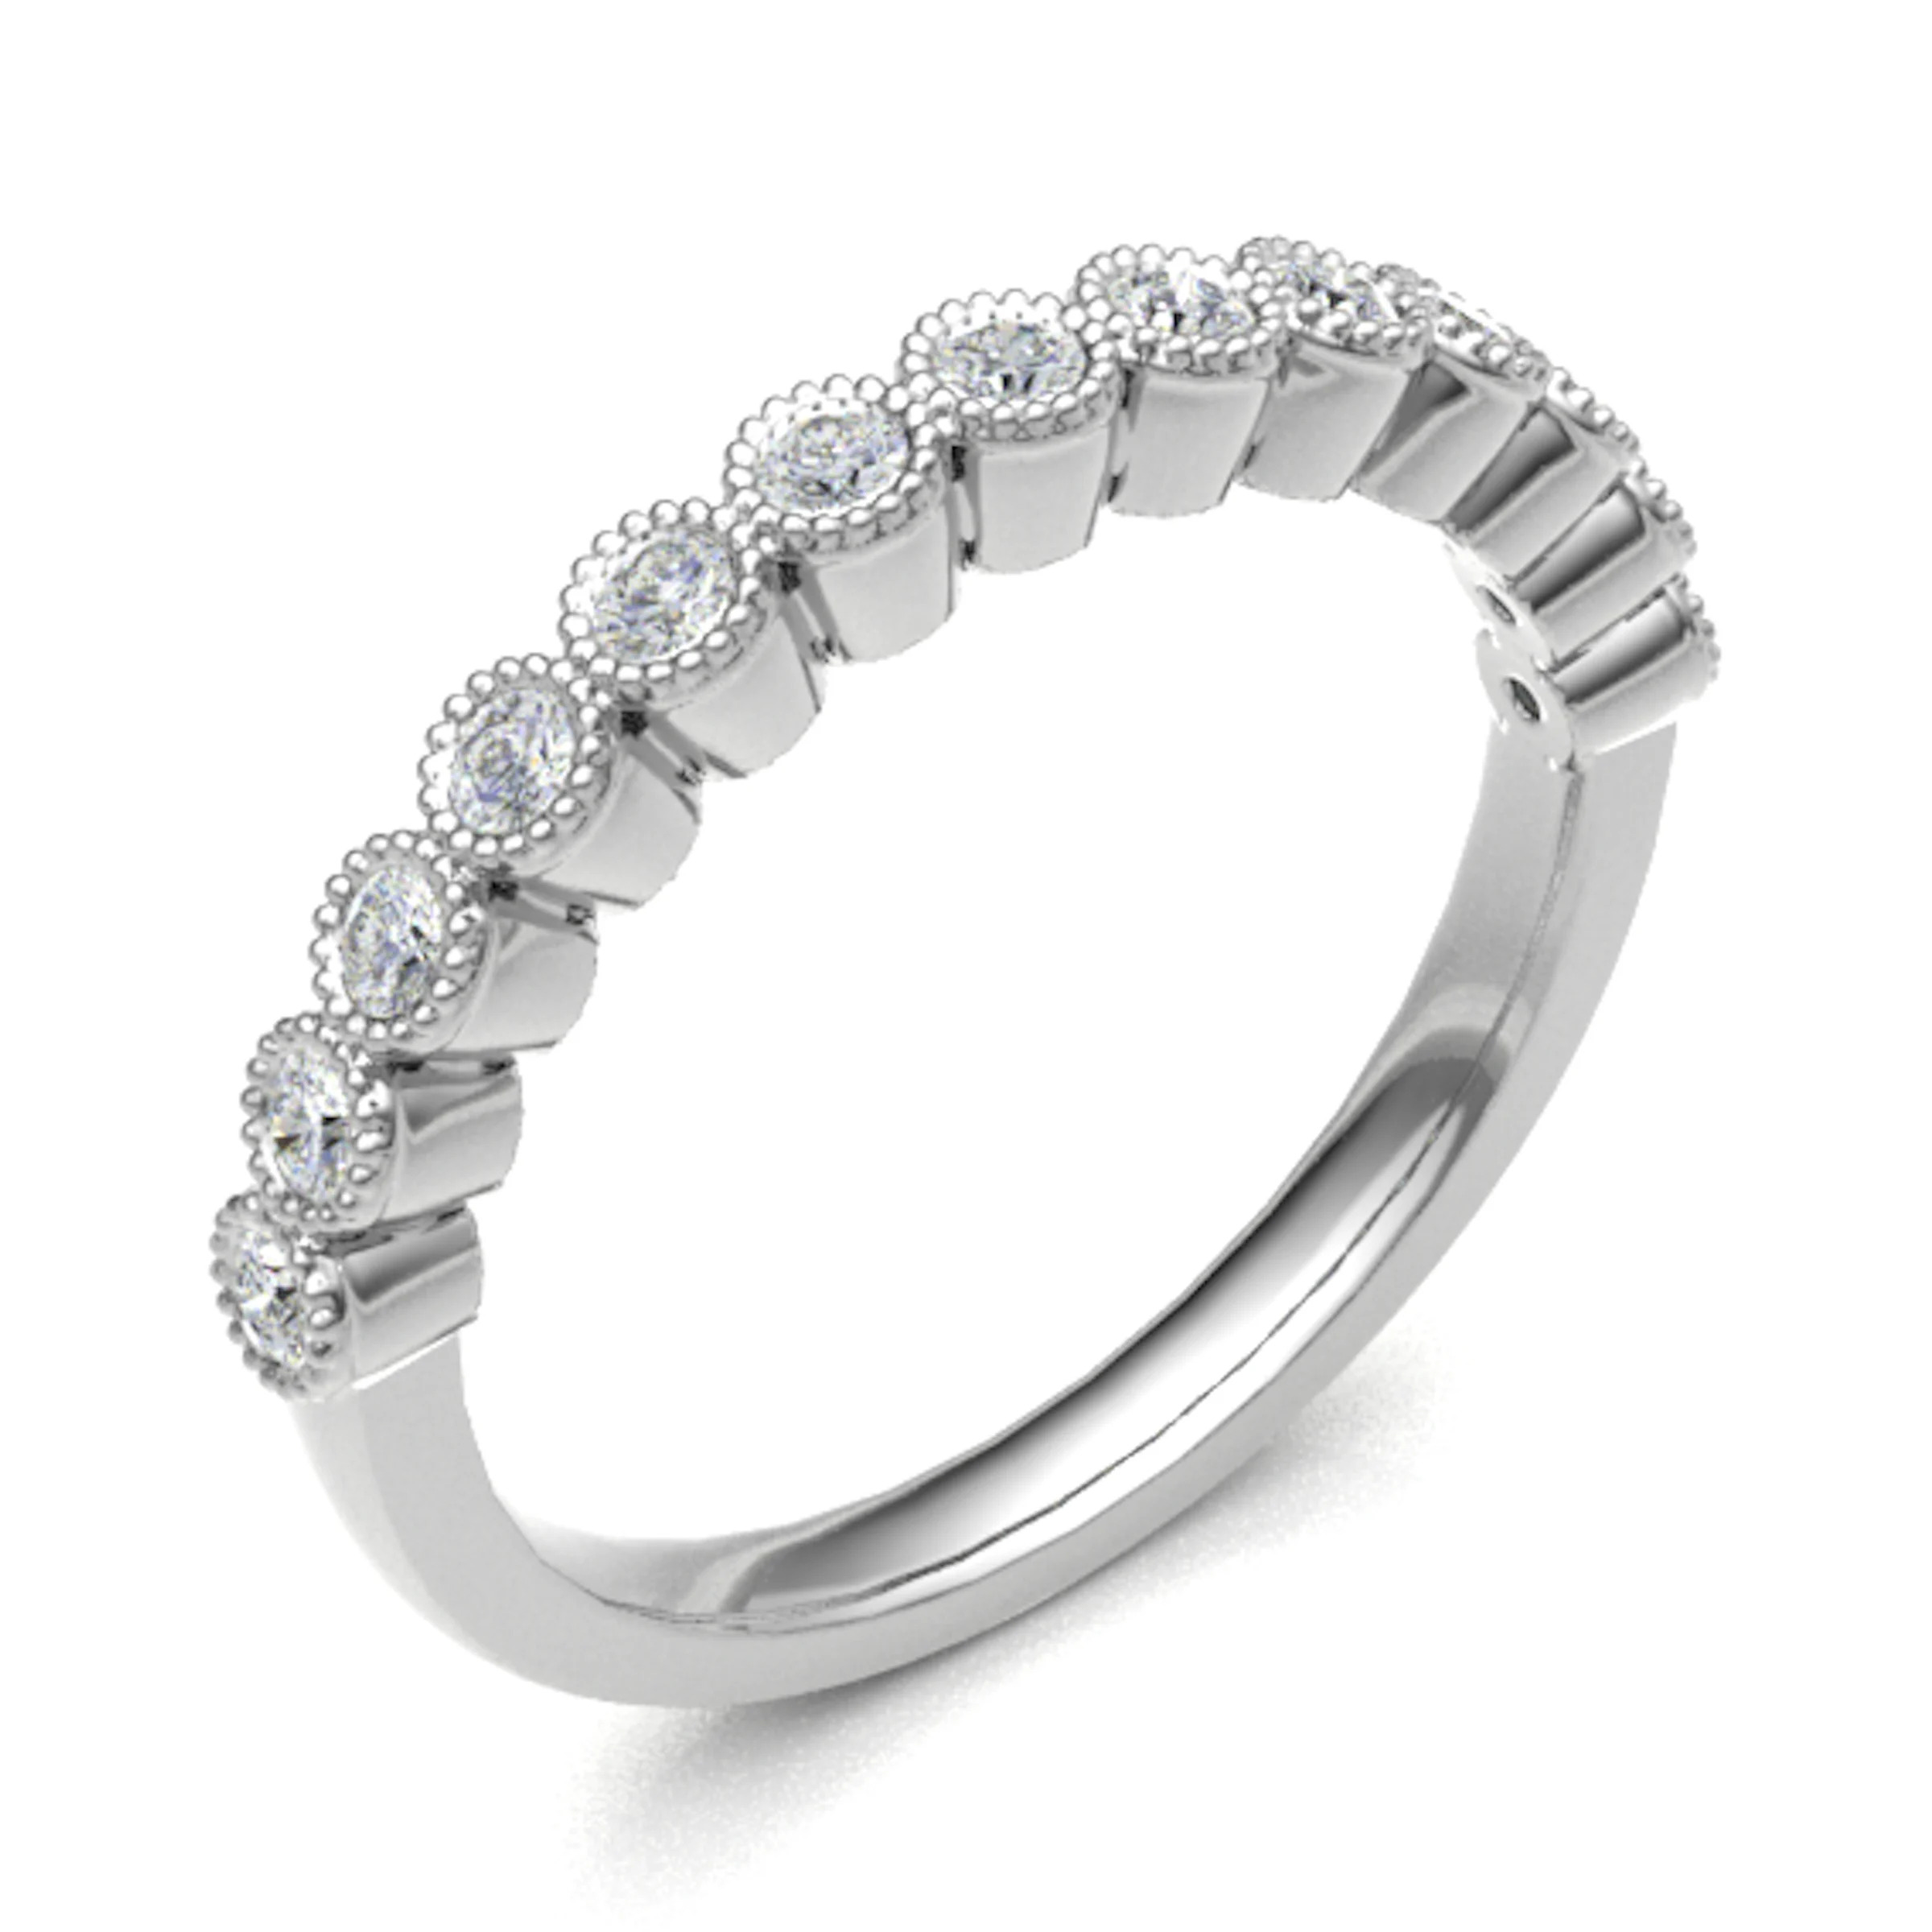 0.15 - 0.33 Carat Lab-Created Eternity Diamond Rings